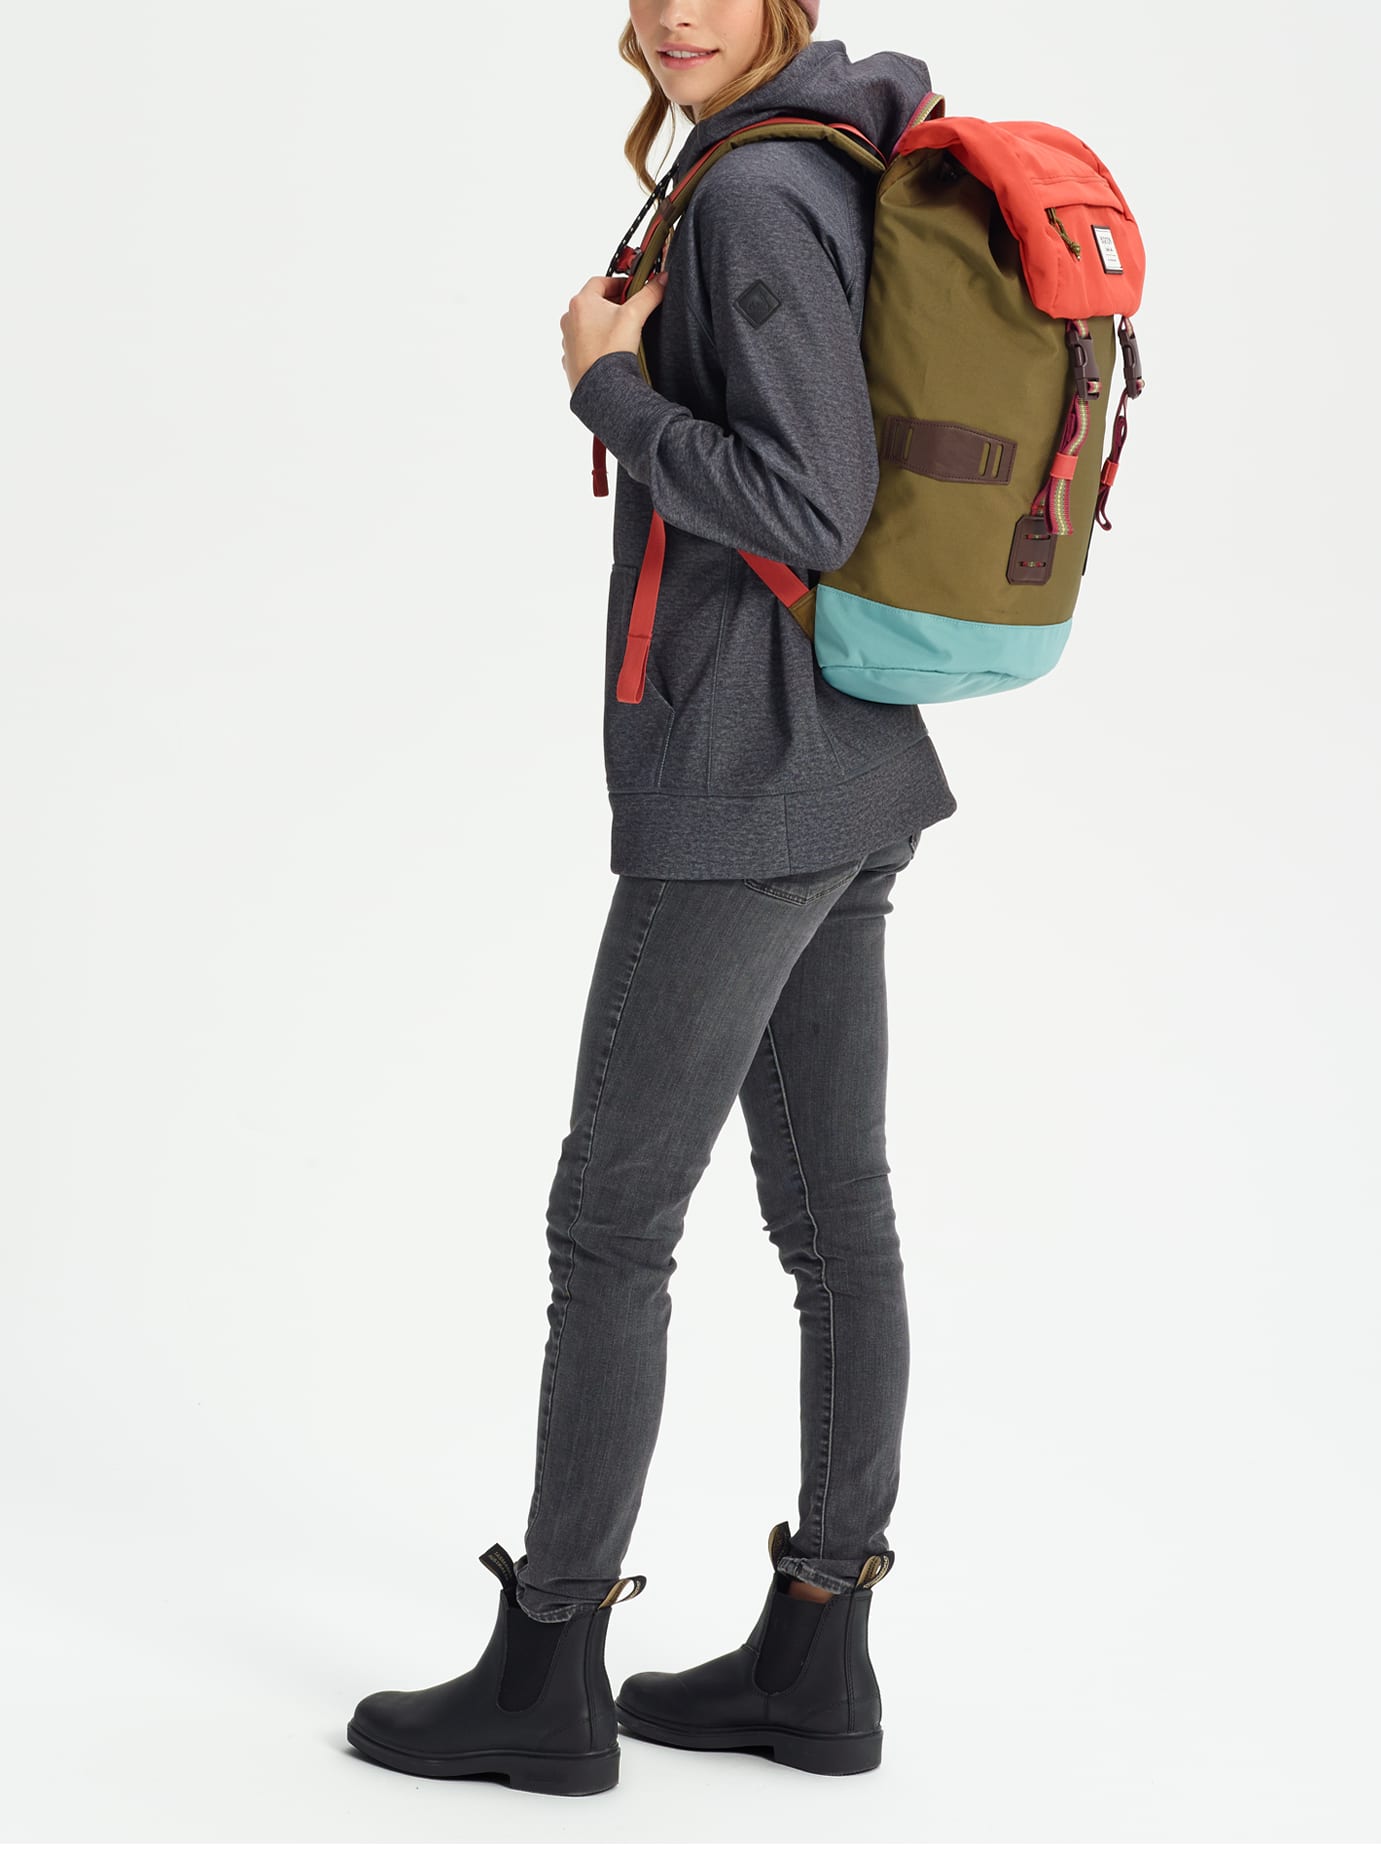 Burton Tinder Backpack | Burton.com Fall 2019 CA